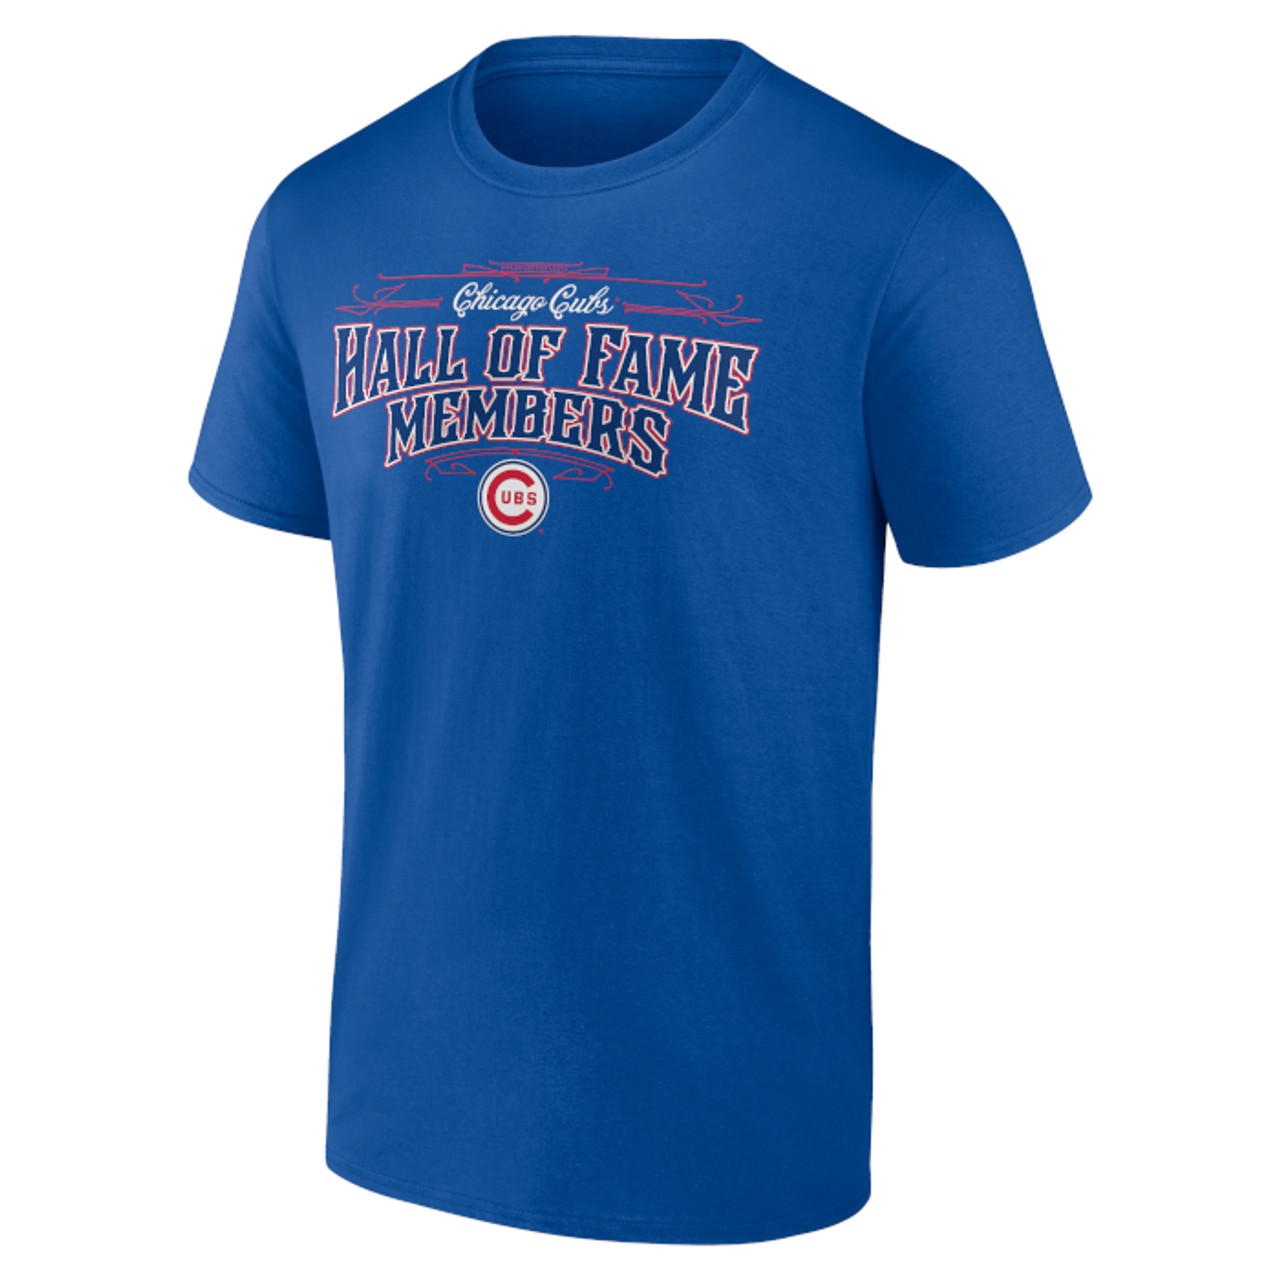 Chicago Cubs Royal Team Hall Of Famer Roster Tee Shirts - Nvamerch